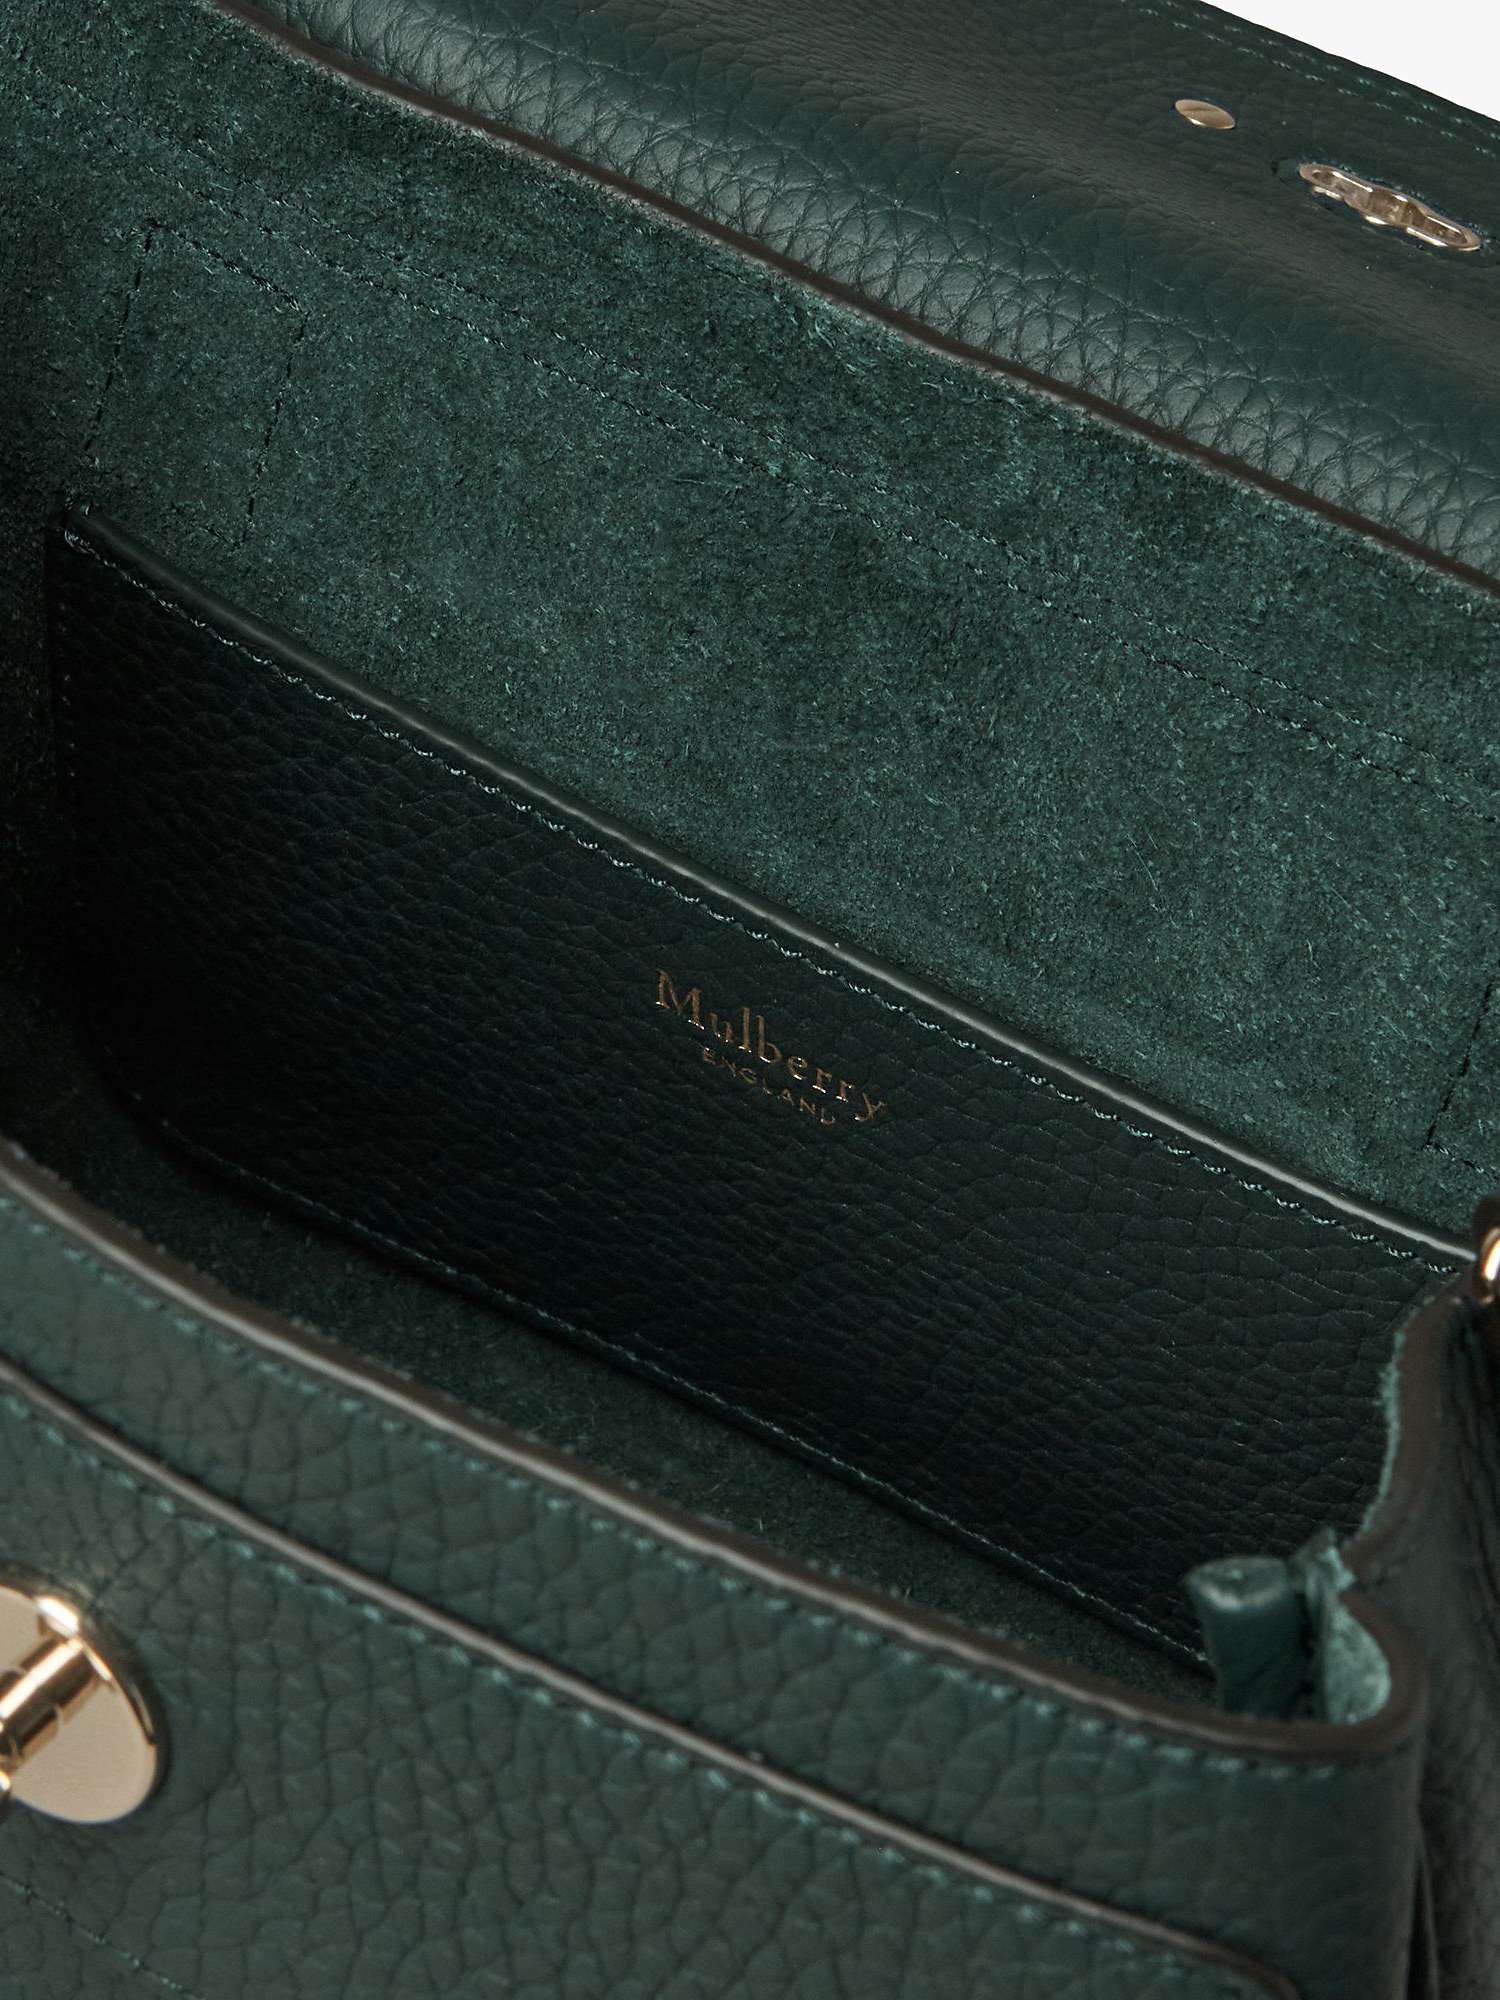 Buy Mulberry Mini Alexa Heavy Grain Leather Cross Body Bag Online at johnlewis.com